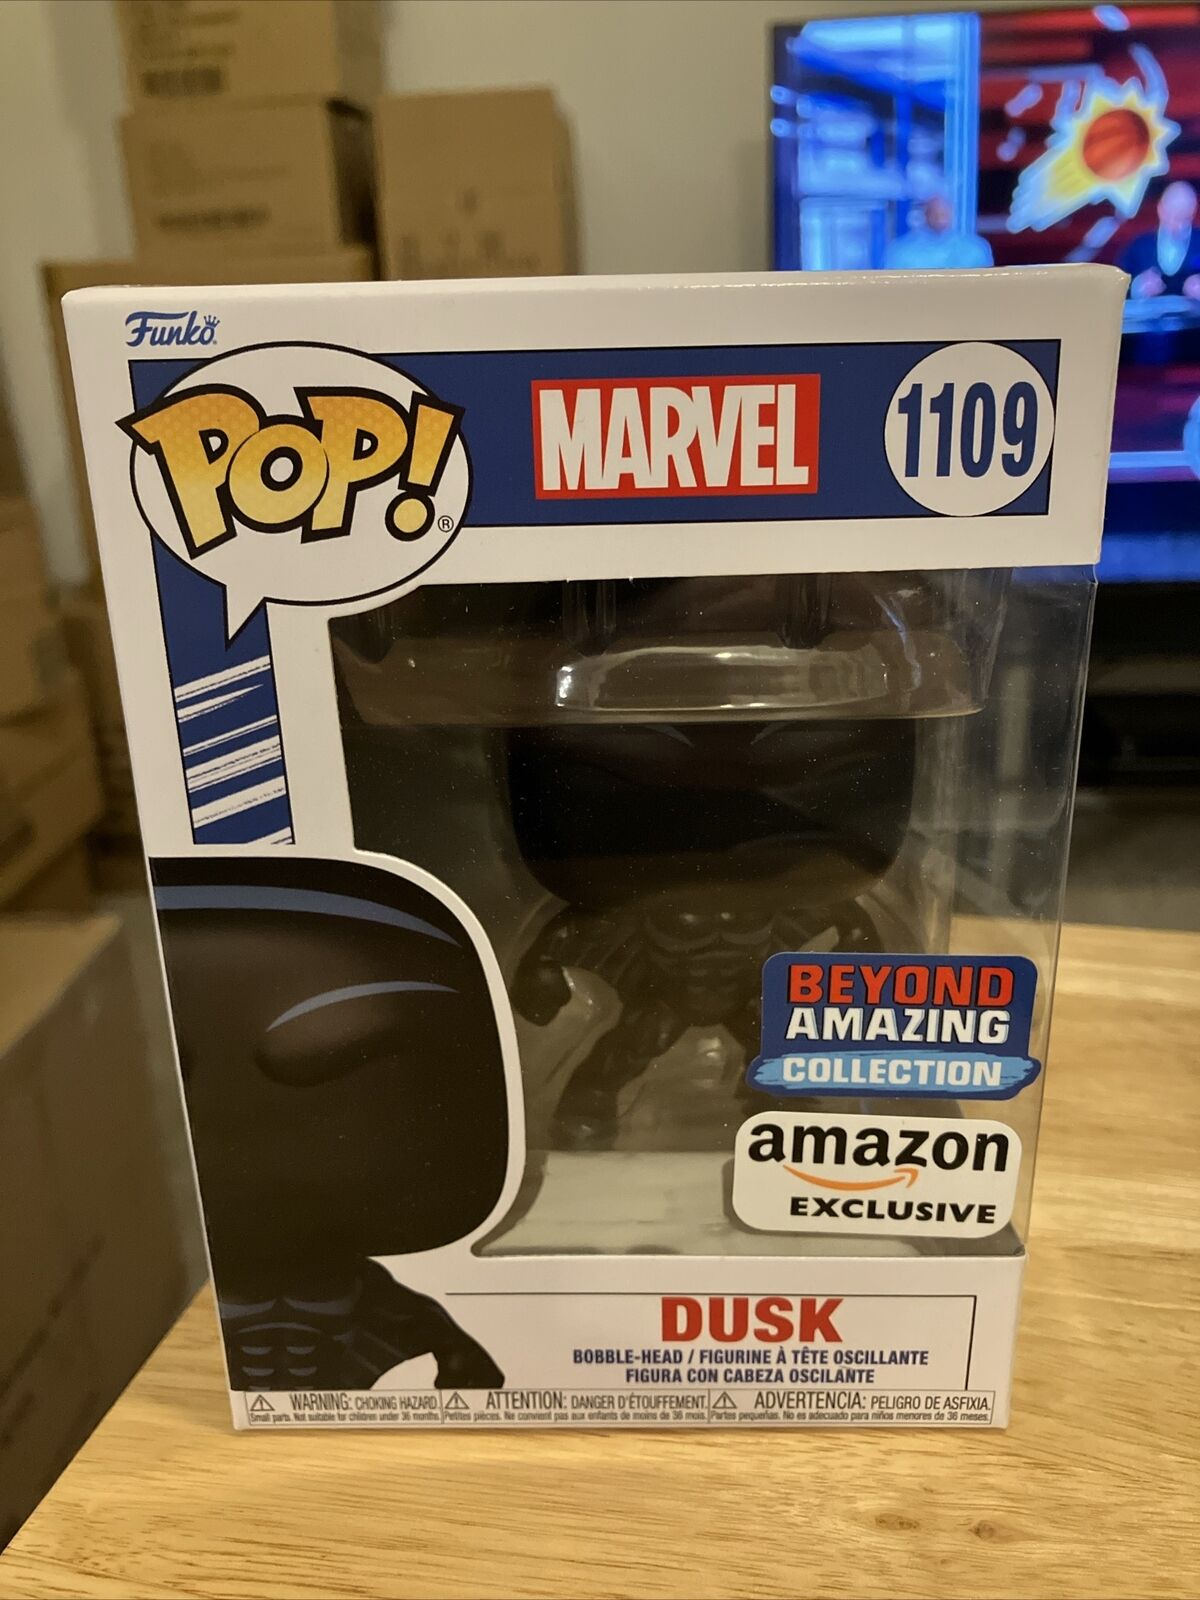 Funko Pop: Marvel - Dusk #1109 Amazon Exclusive Beyond Amazing Collection